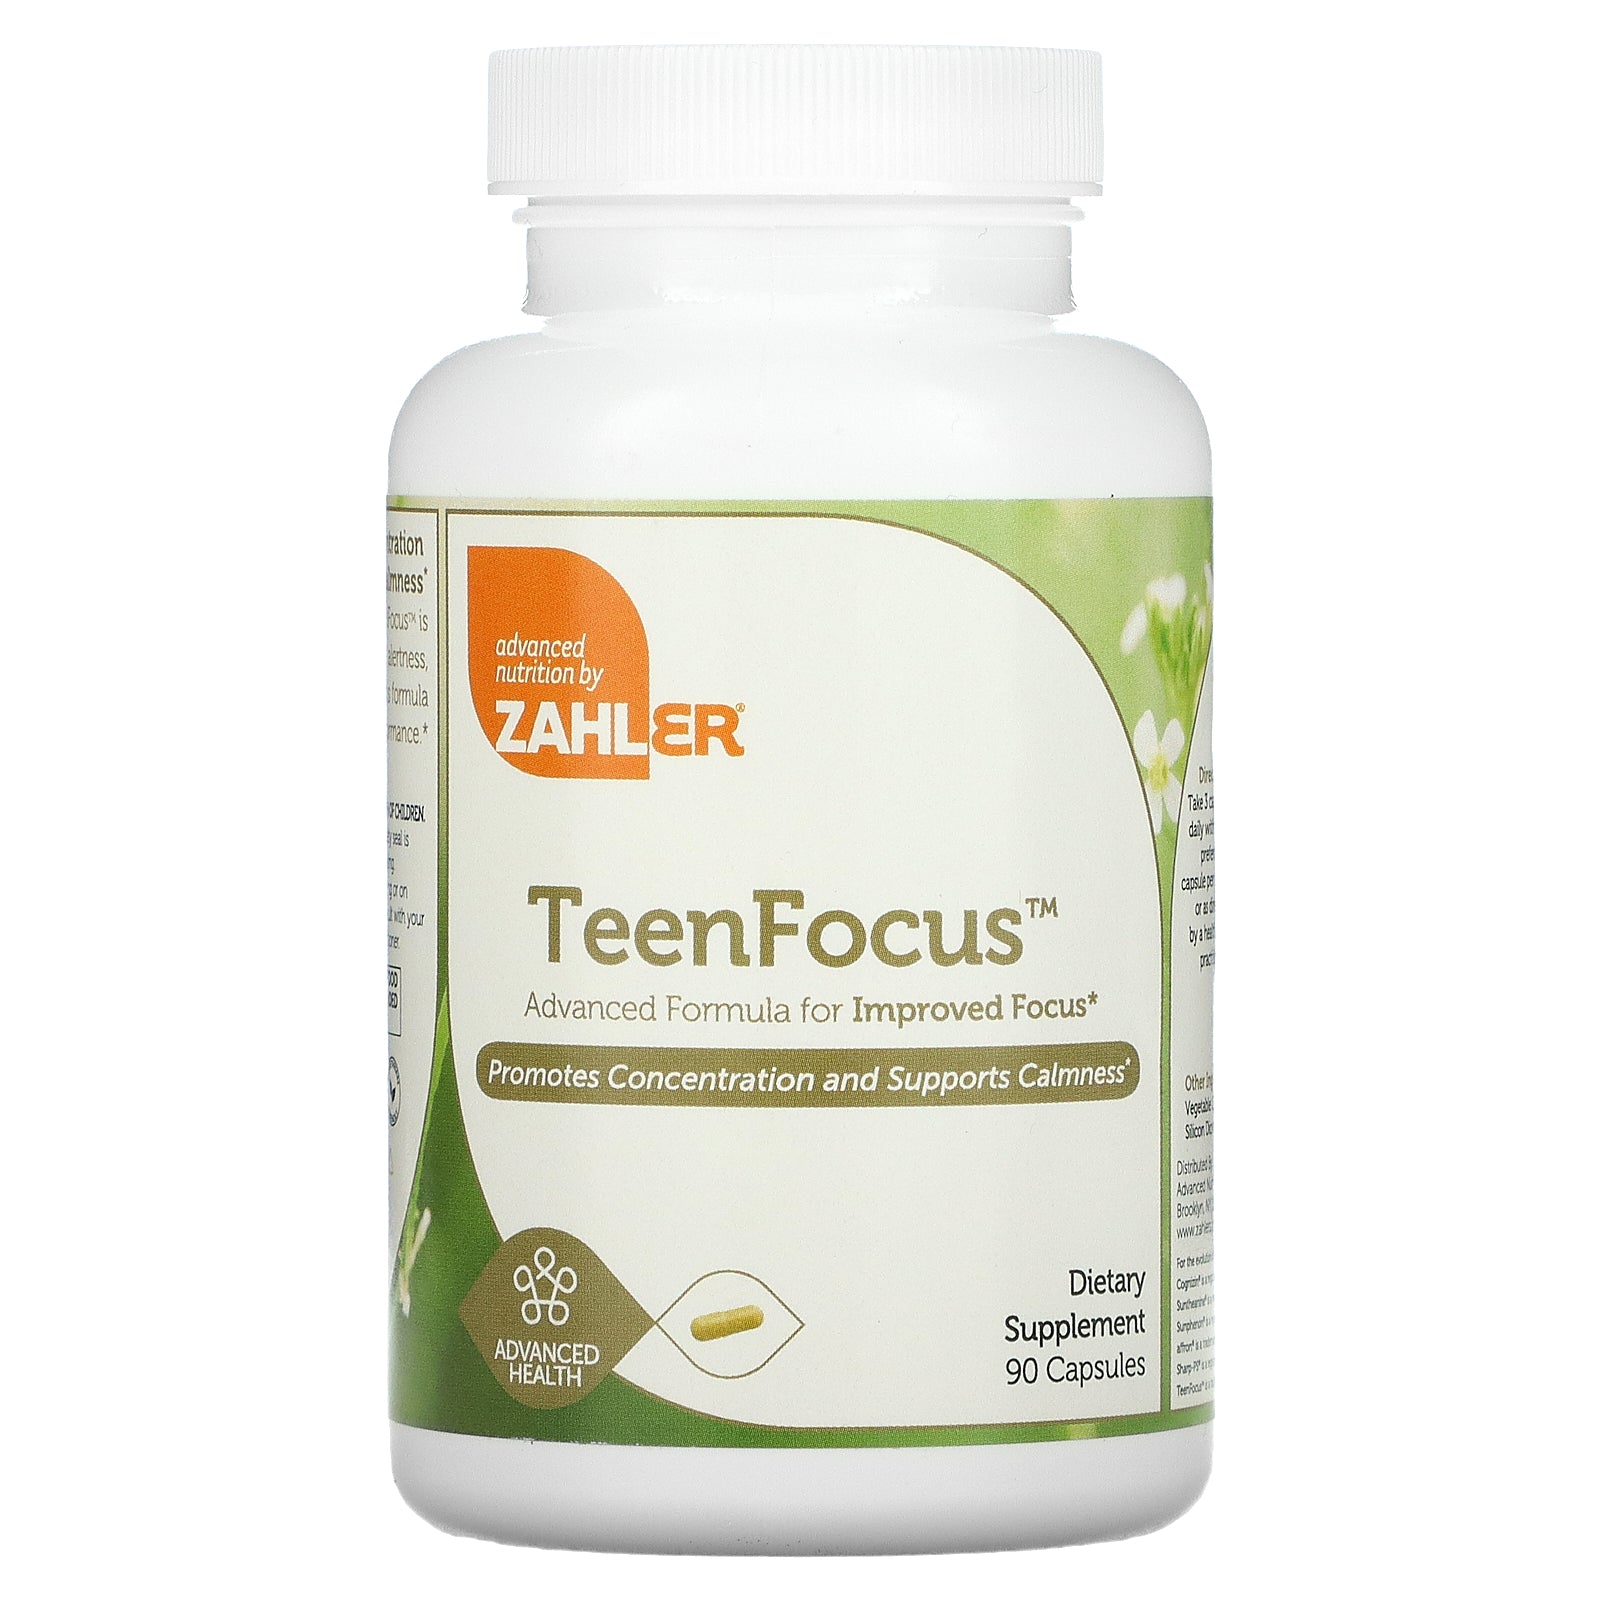 Zahler, TeenFocus, Advanced Formula for Improved Focus